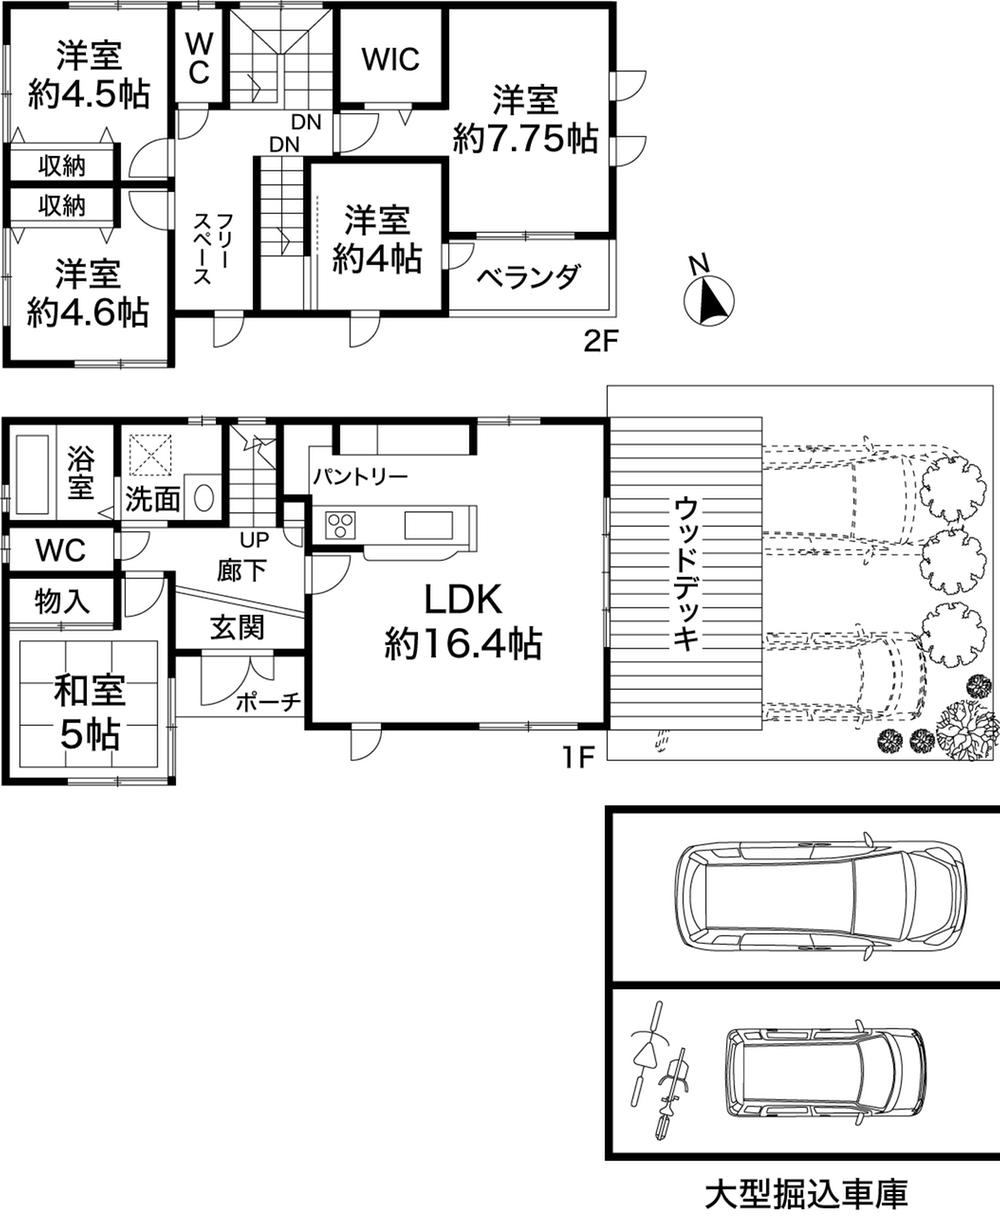 Floor plan. 31,800,000 yen, 5LDK, Land area 194.62 sq m , Building area 145.5 sq m